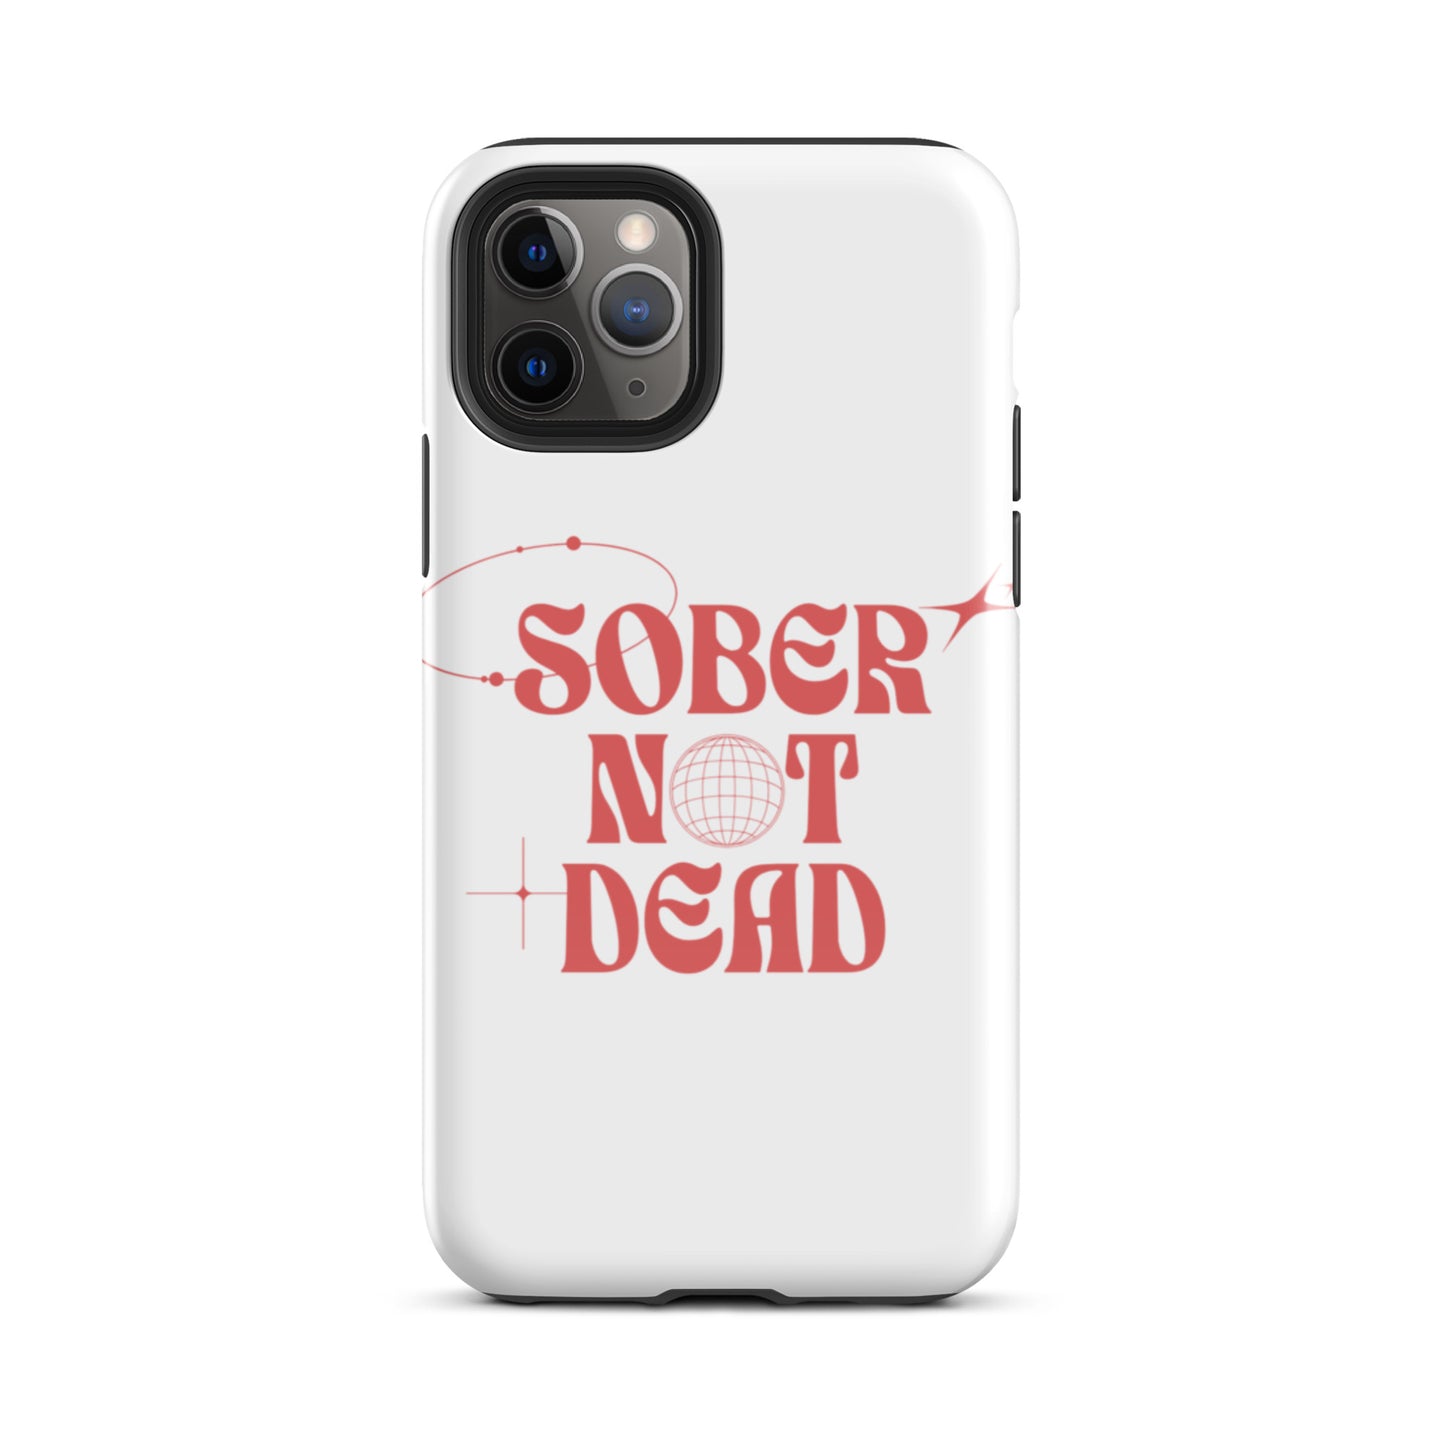 SOBER NOT DEAD iphone case